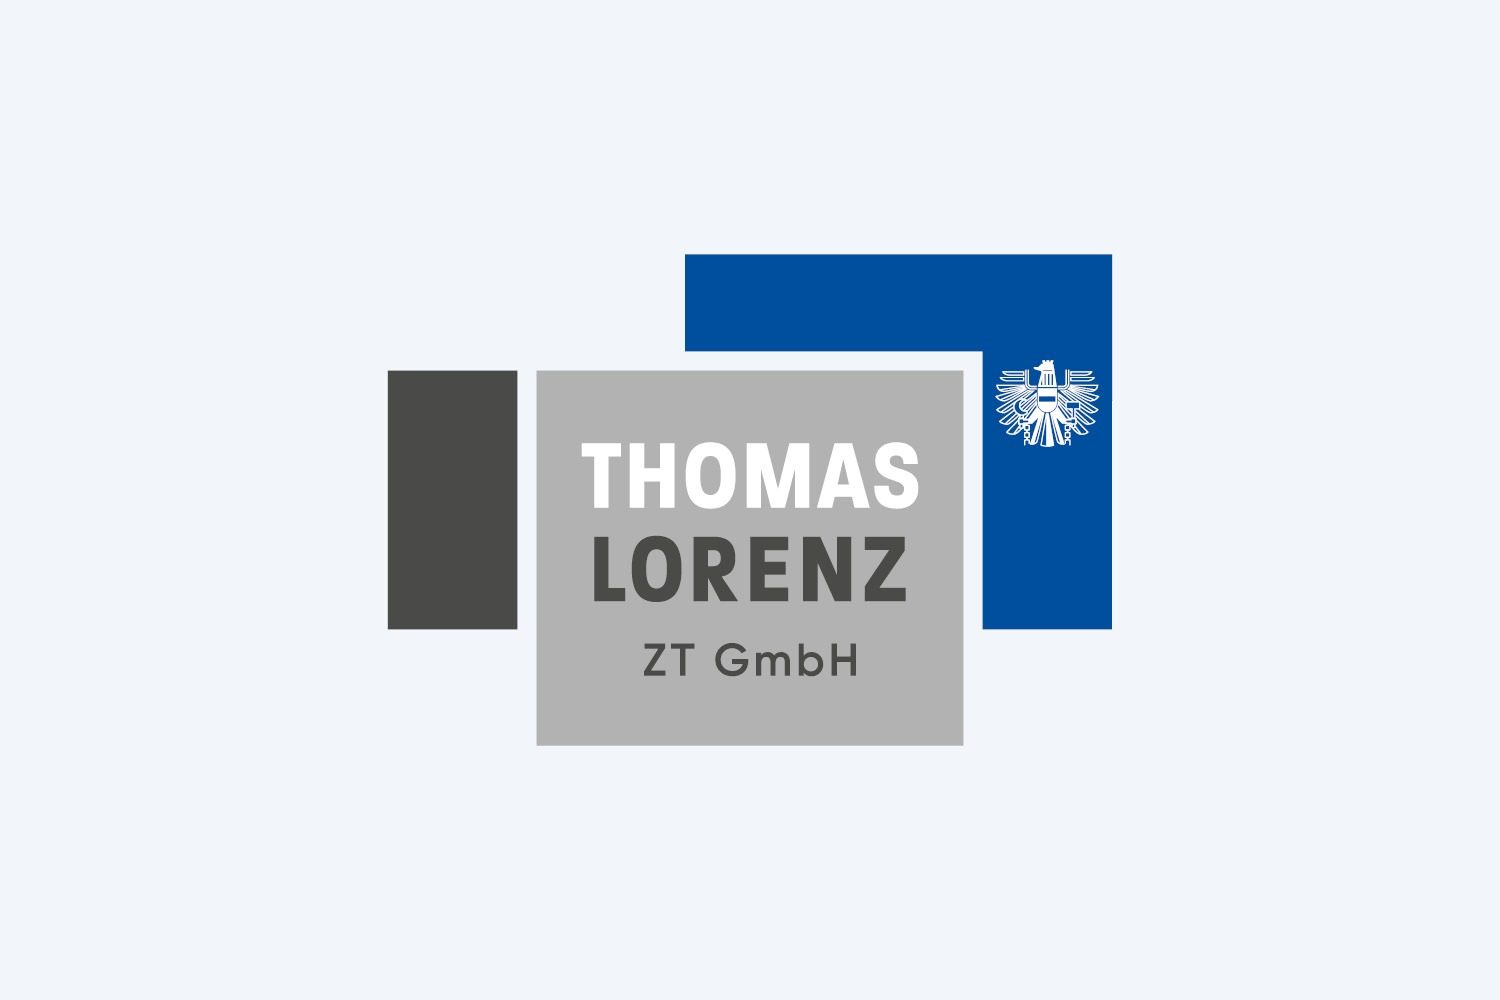 Thomas Lorenz ZT gmbh logo.